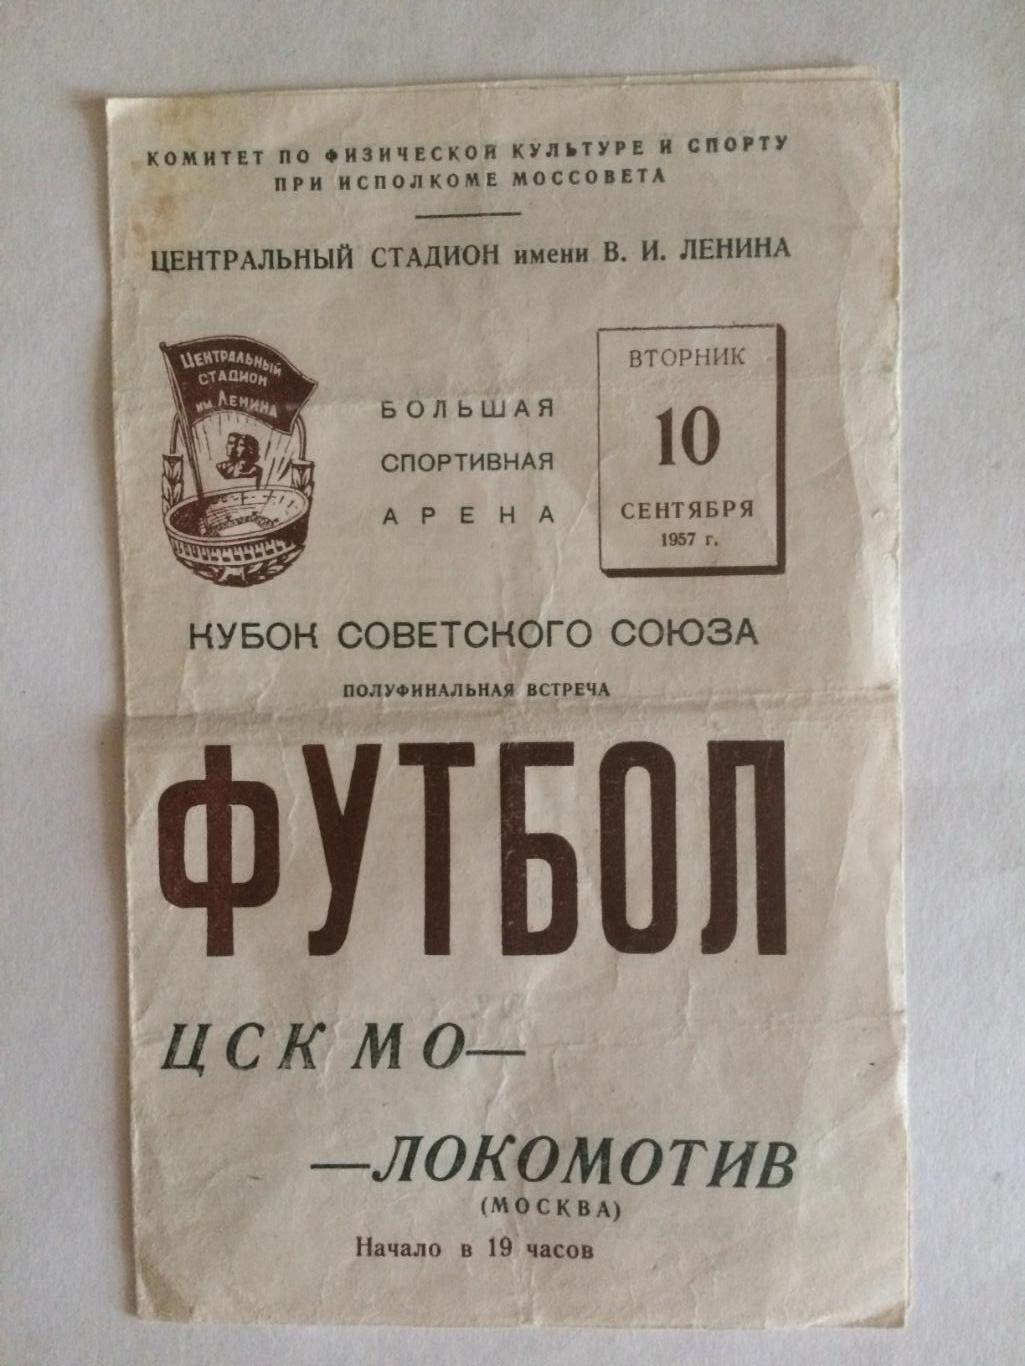 ЦСК МО - Локомотив Москва 10.09.1957 Кубок СССР